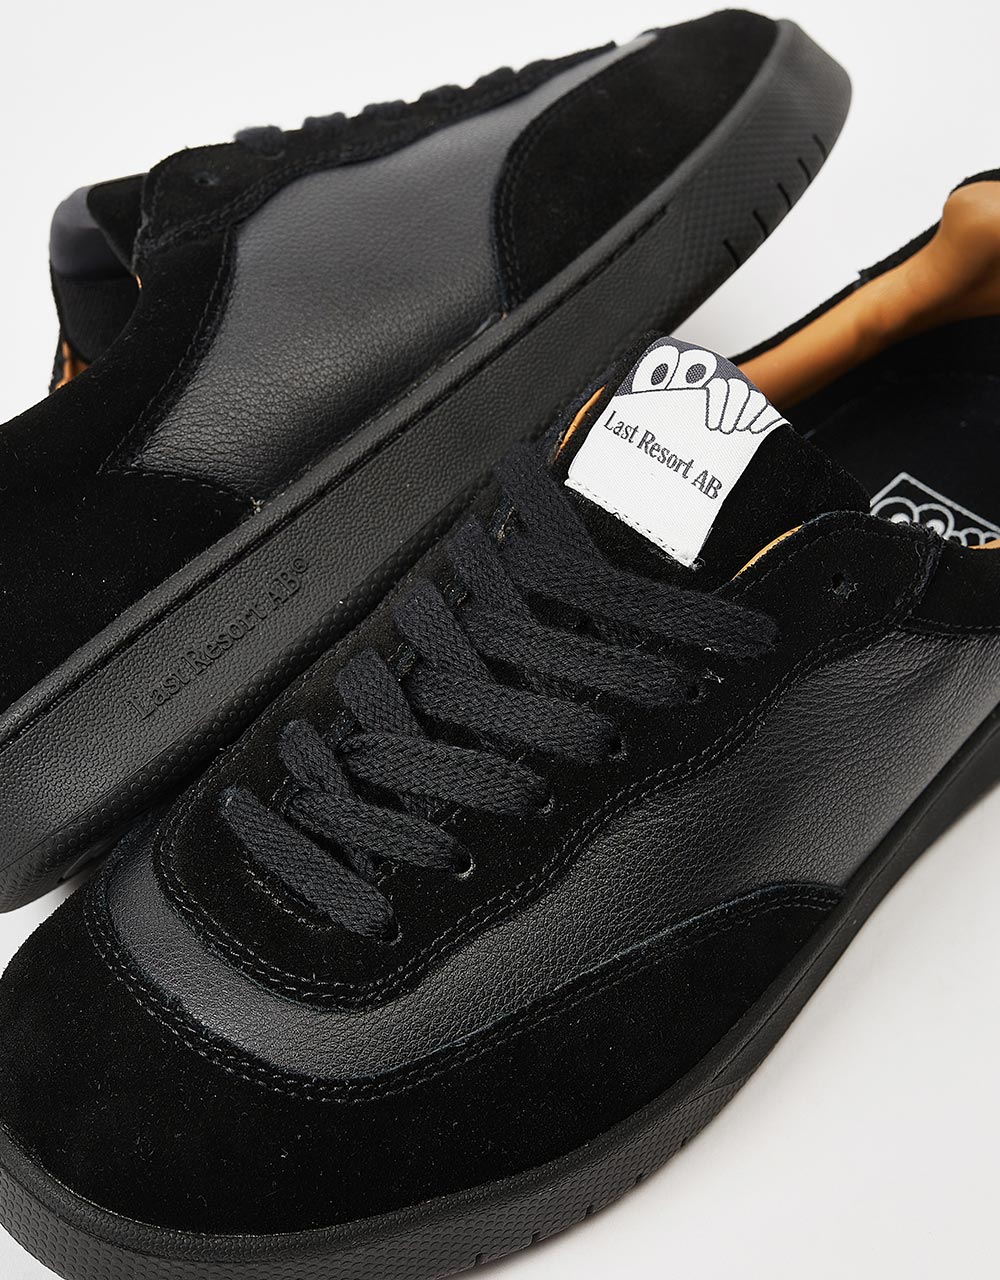 Last Resort AB CM001 Lo Skate Shoes - Black/Black